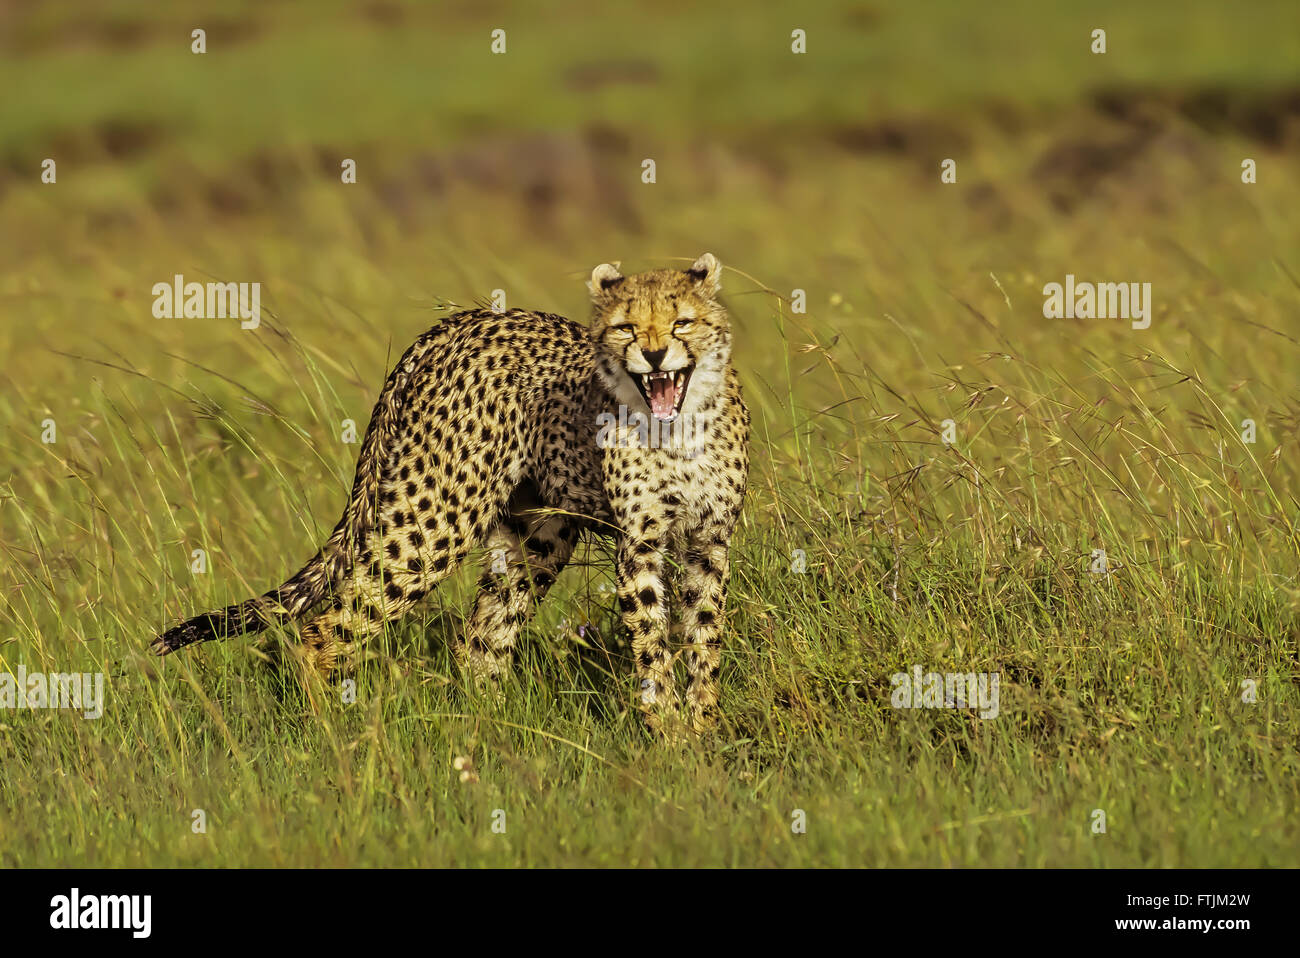 Cheetah growling Stock Photo